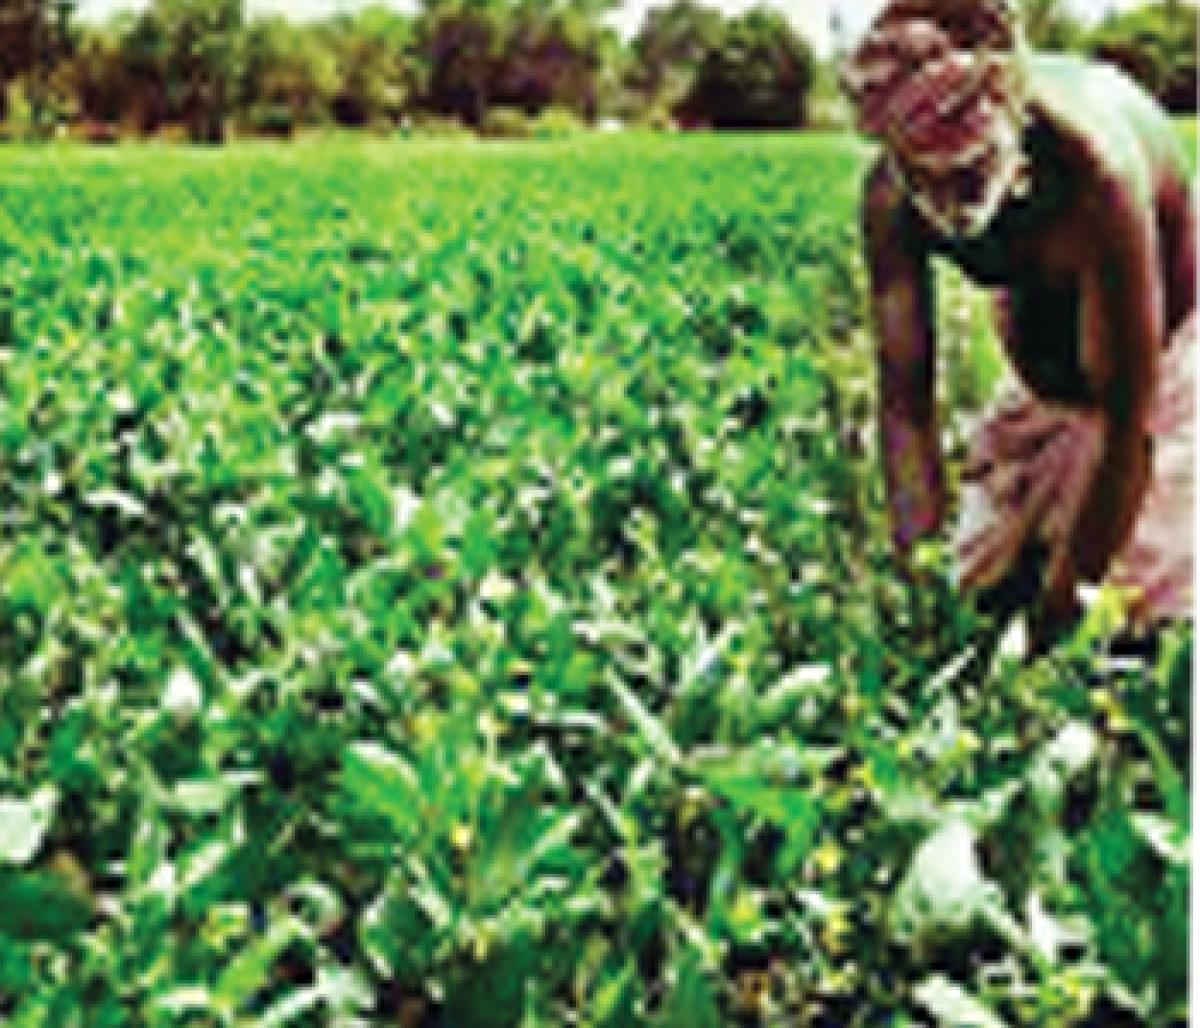 Black gram farmers’ hopes dashed